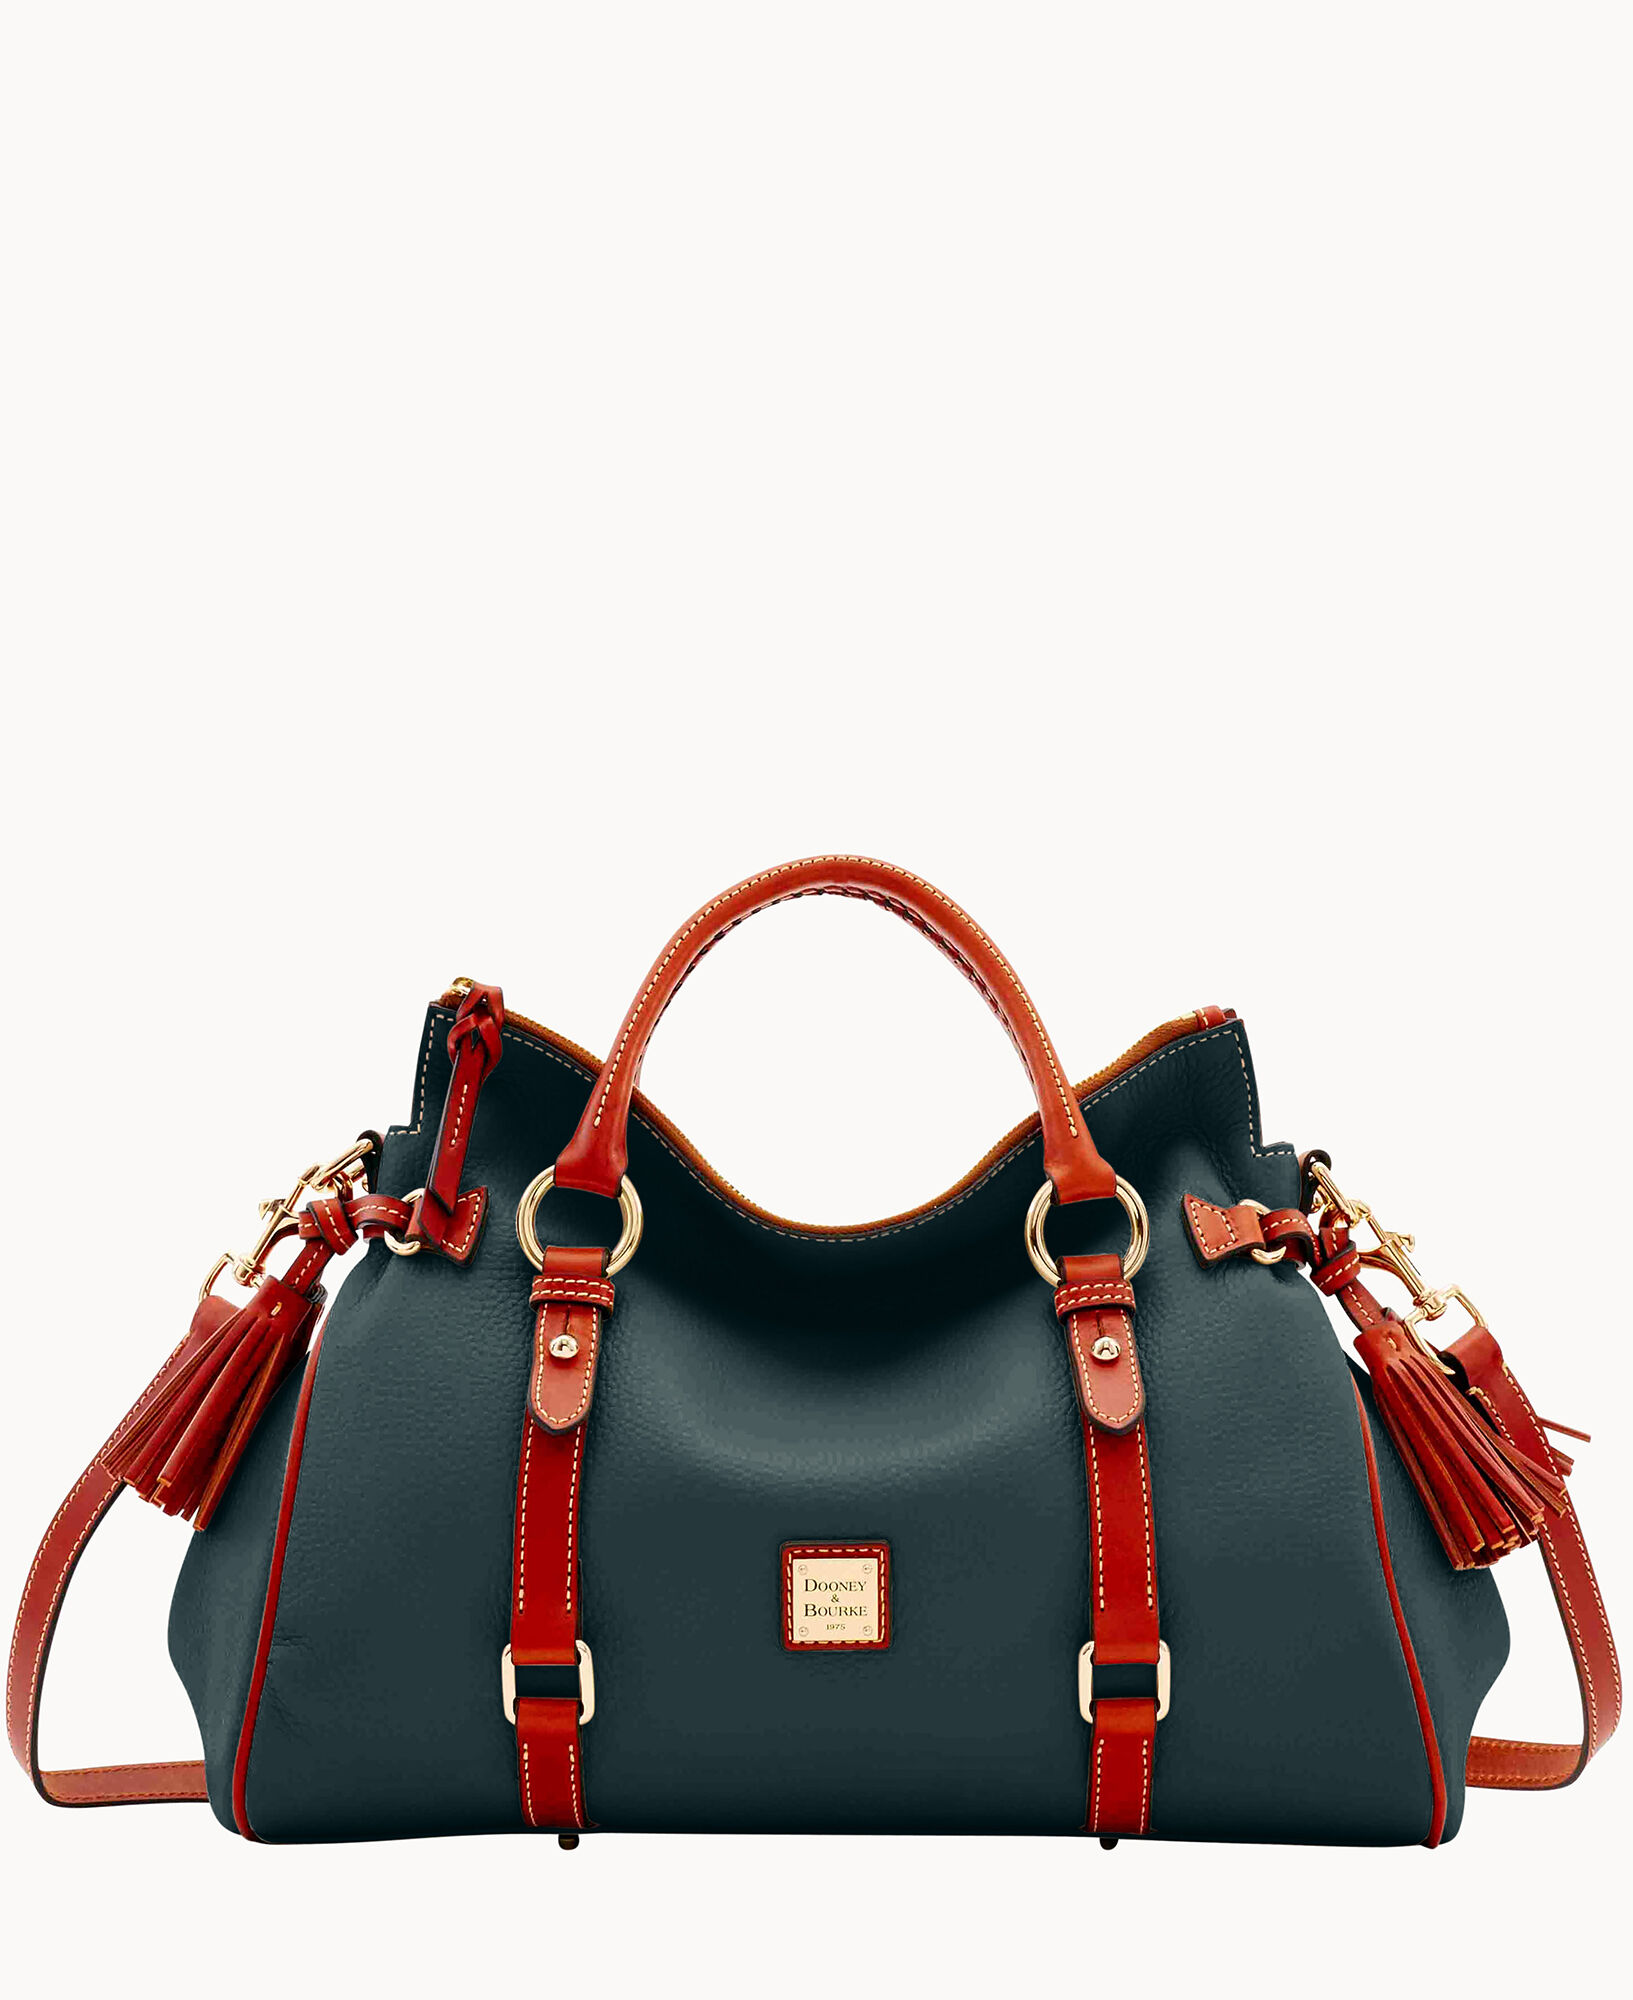  Dooney & Bourke Handbag, Pebble Grain Satchel - Black :  Clothing, Shoes & Jewelry